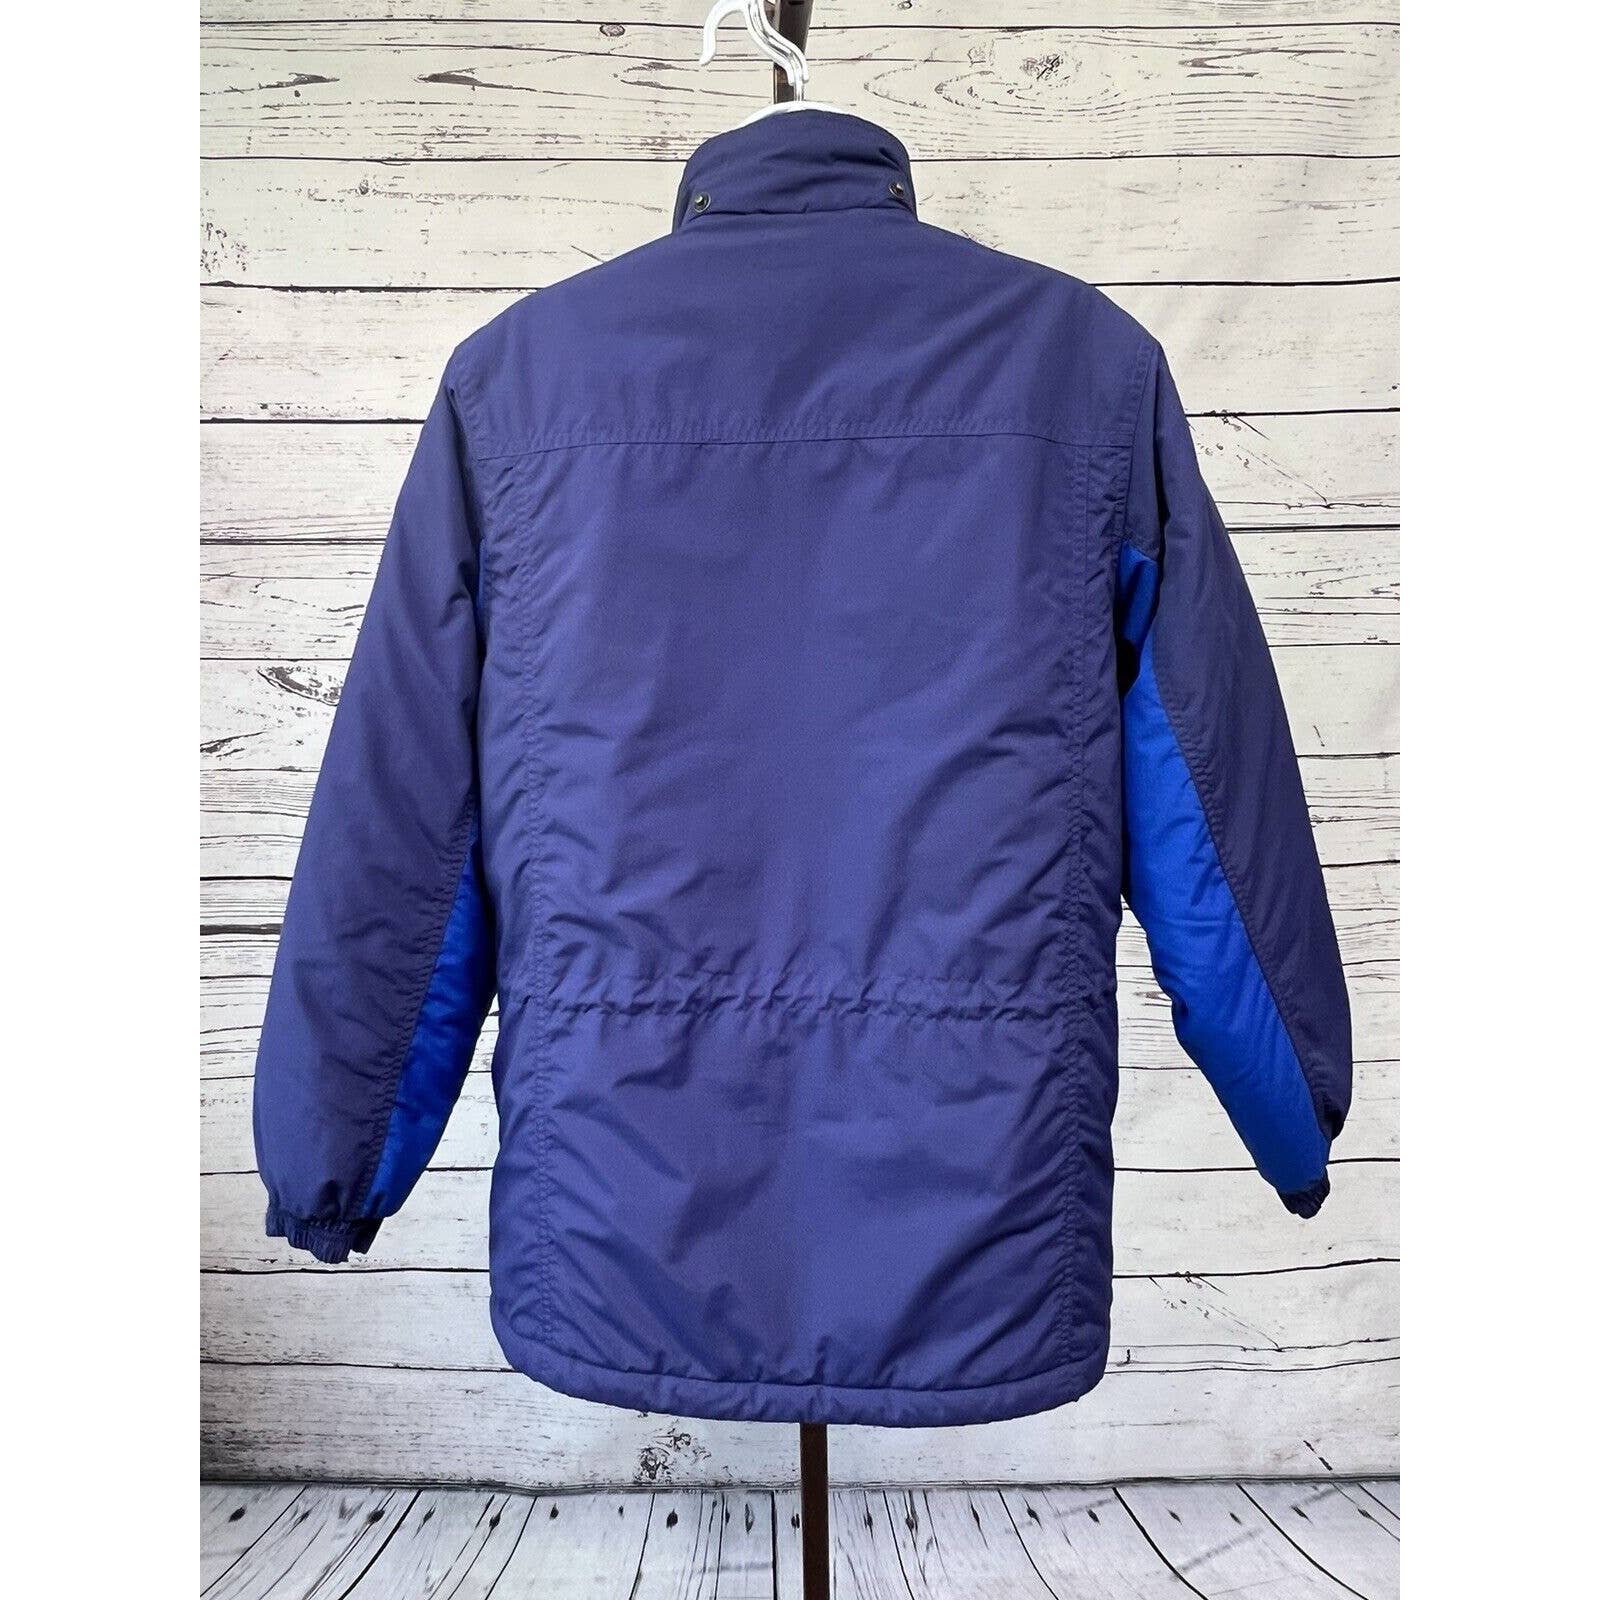 LL BEAN Winter Parka Jacket Women’s Small Purple Blue Thinsulate Lined Ski Coat